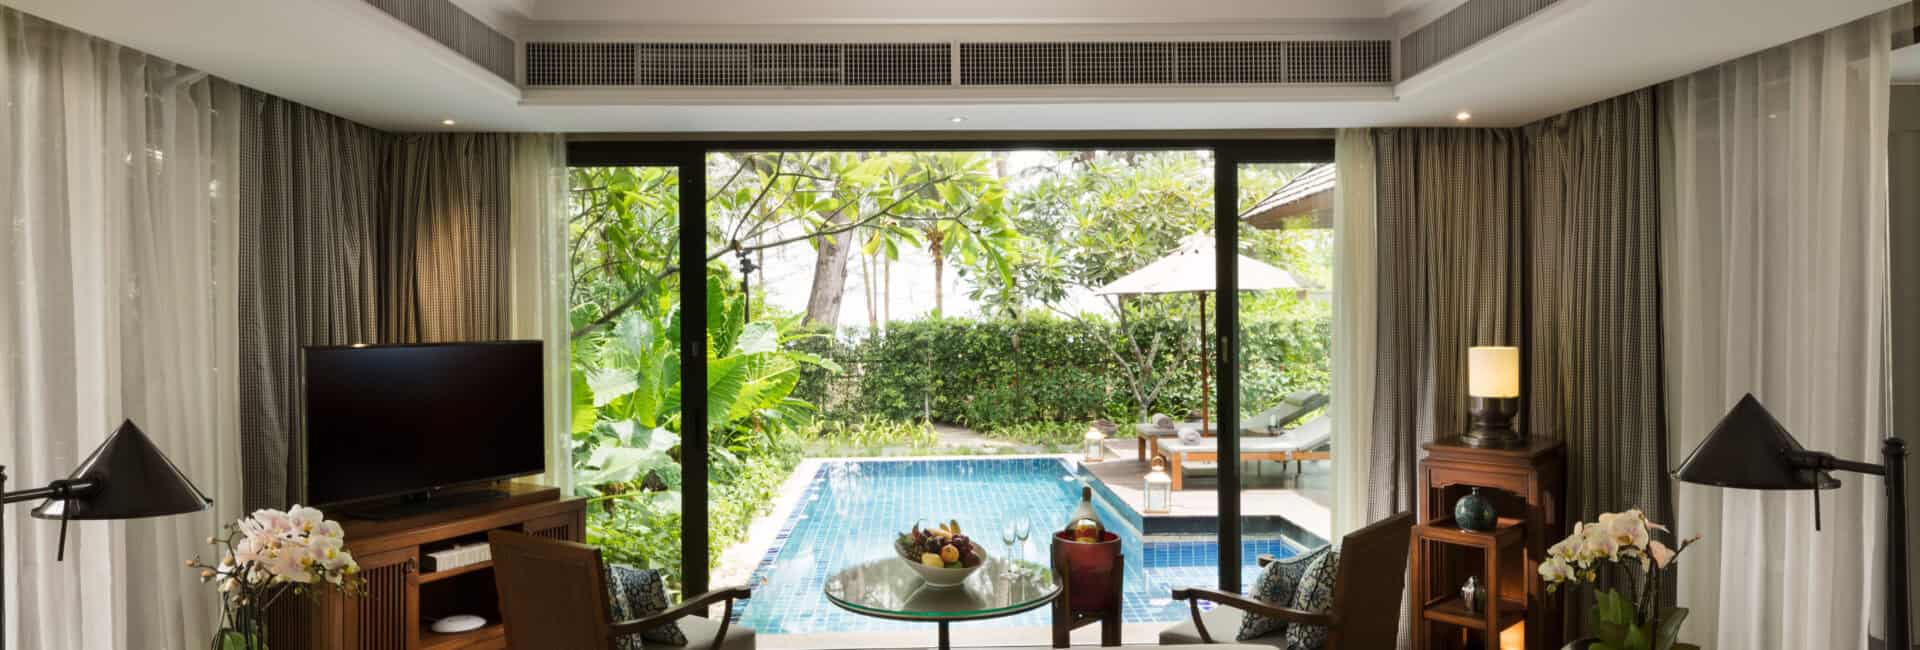 Anantara Layan Phuket Resort - Room with Pool View